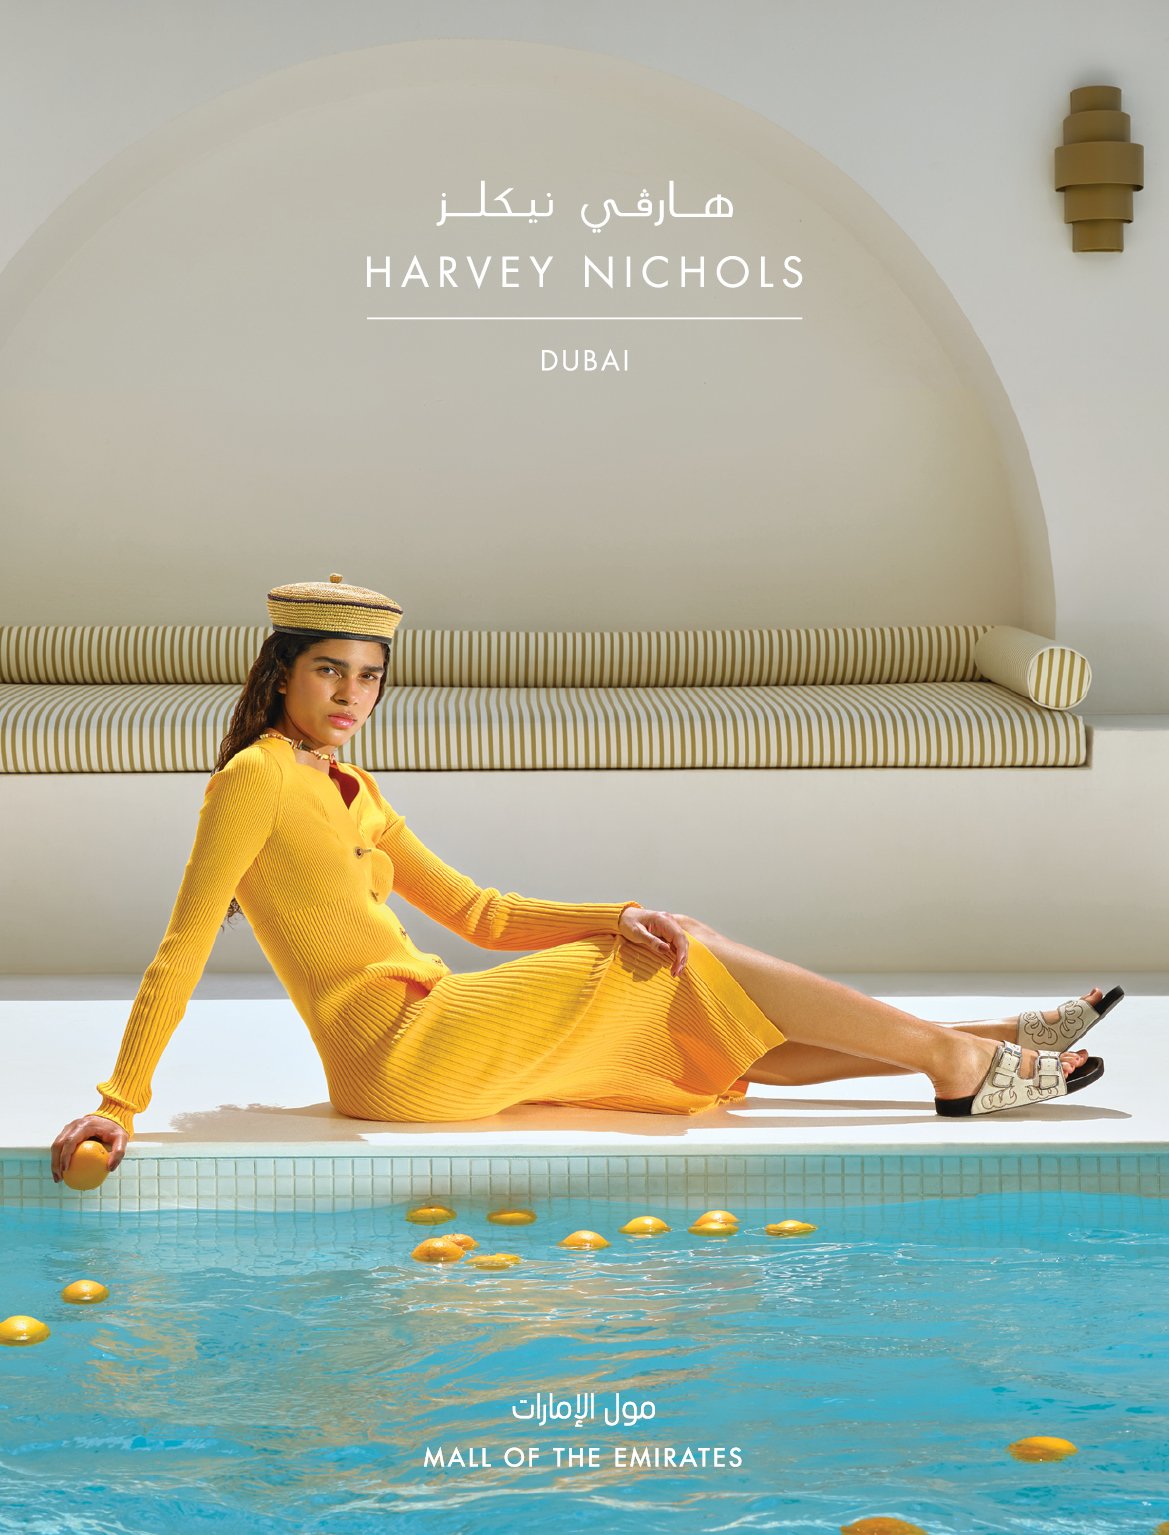 Harvey Nichols, Poolside Campaign, Dubai